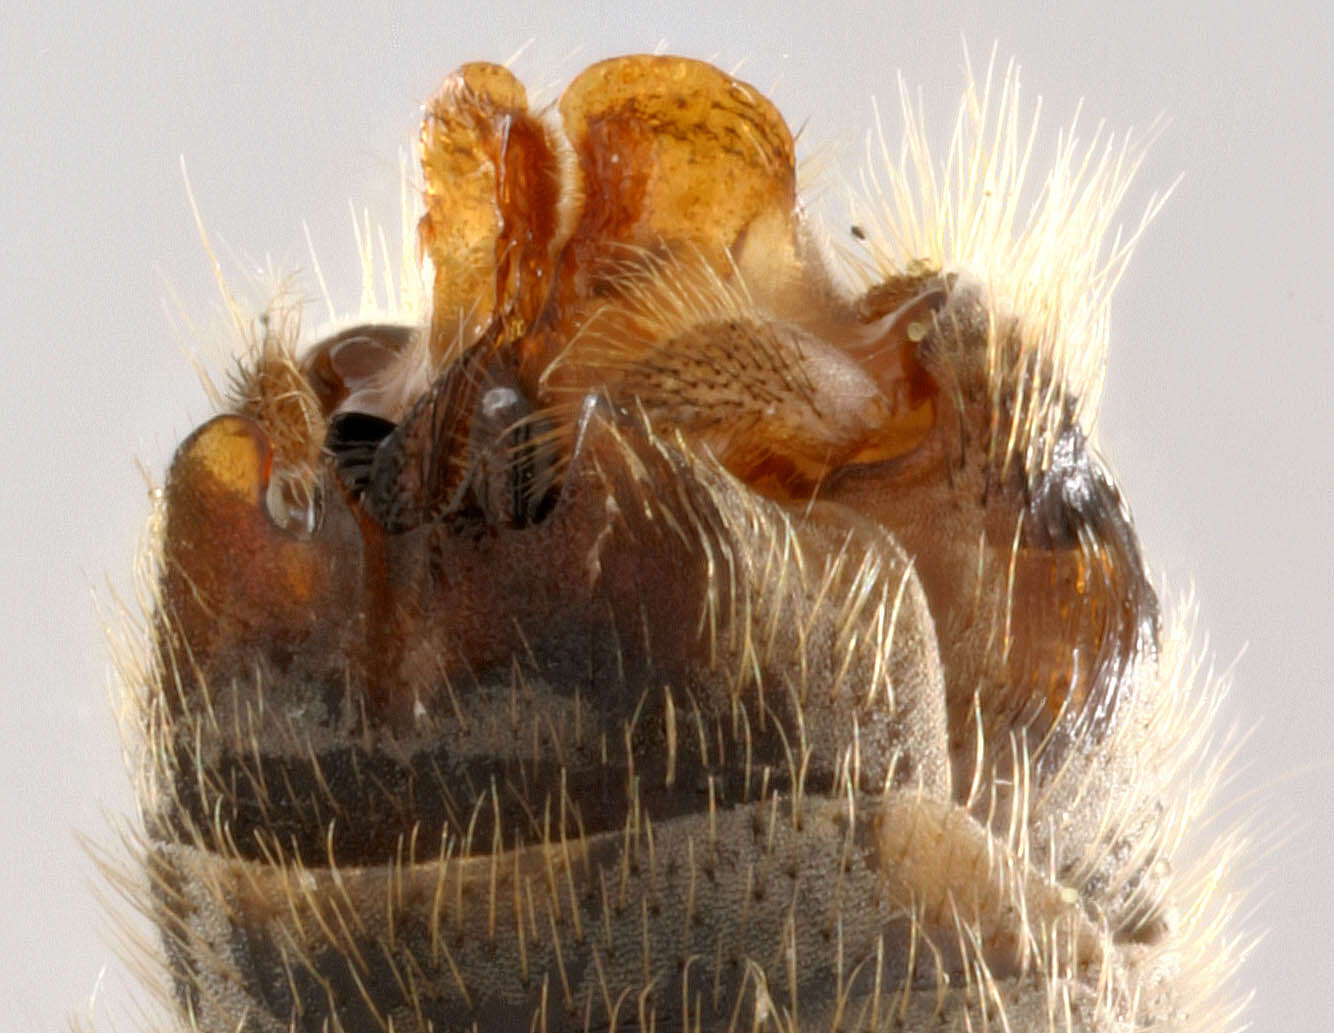 Image of Tipula (Pterelachisus) pabulina Meigen 1818